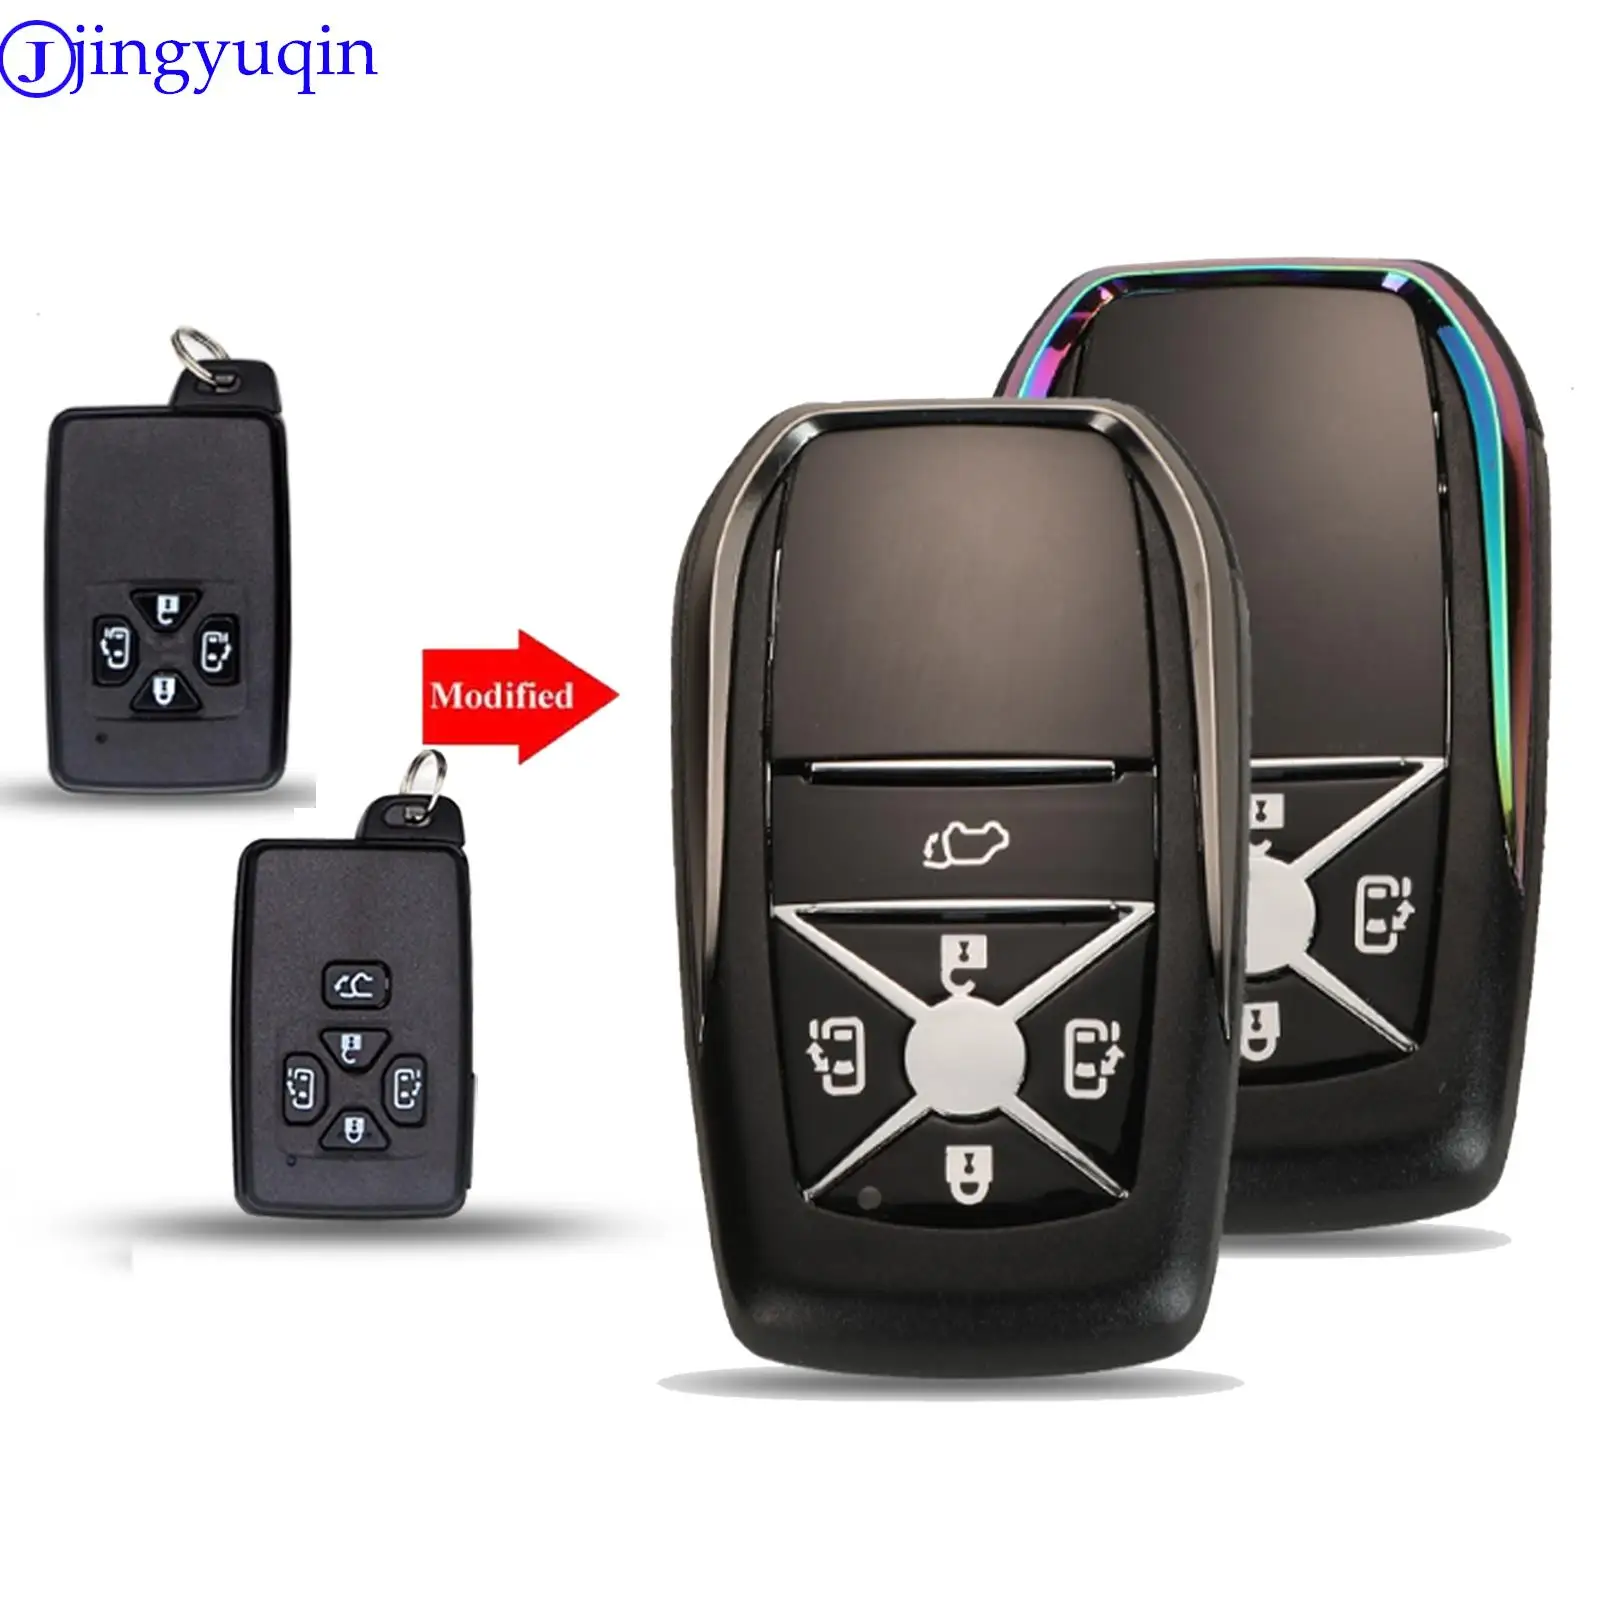 

jingyuqin Remote Modified 4/5 Buttons Smart Key Case Cover For Toyota Reiz/Avalon/Previa/Alphard/Prius Car Key Shell Fob